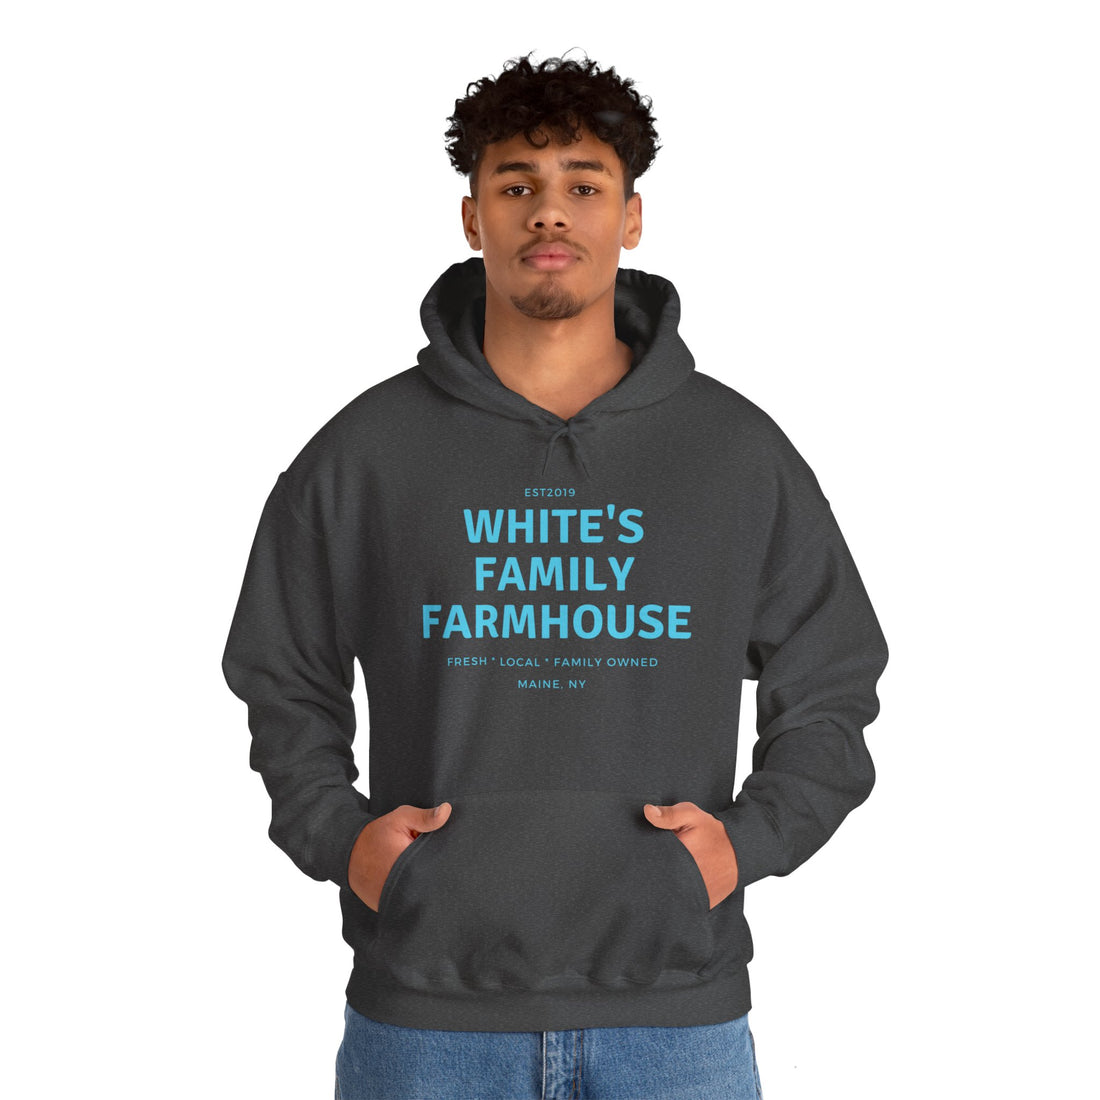 White's Family Farmhouse Hooded Sweatshirt - White's Family Farmhouse 